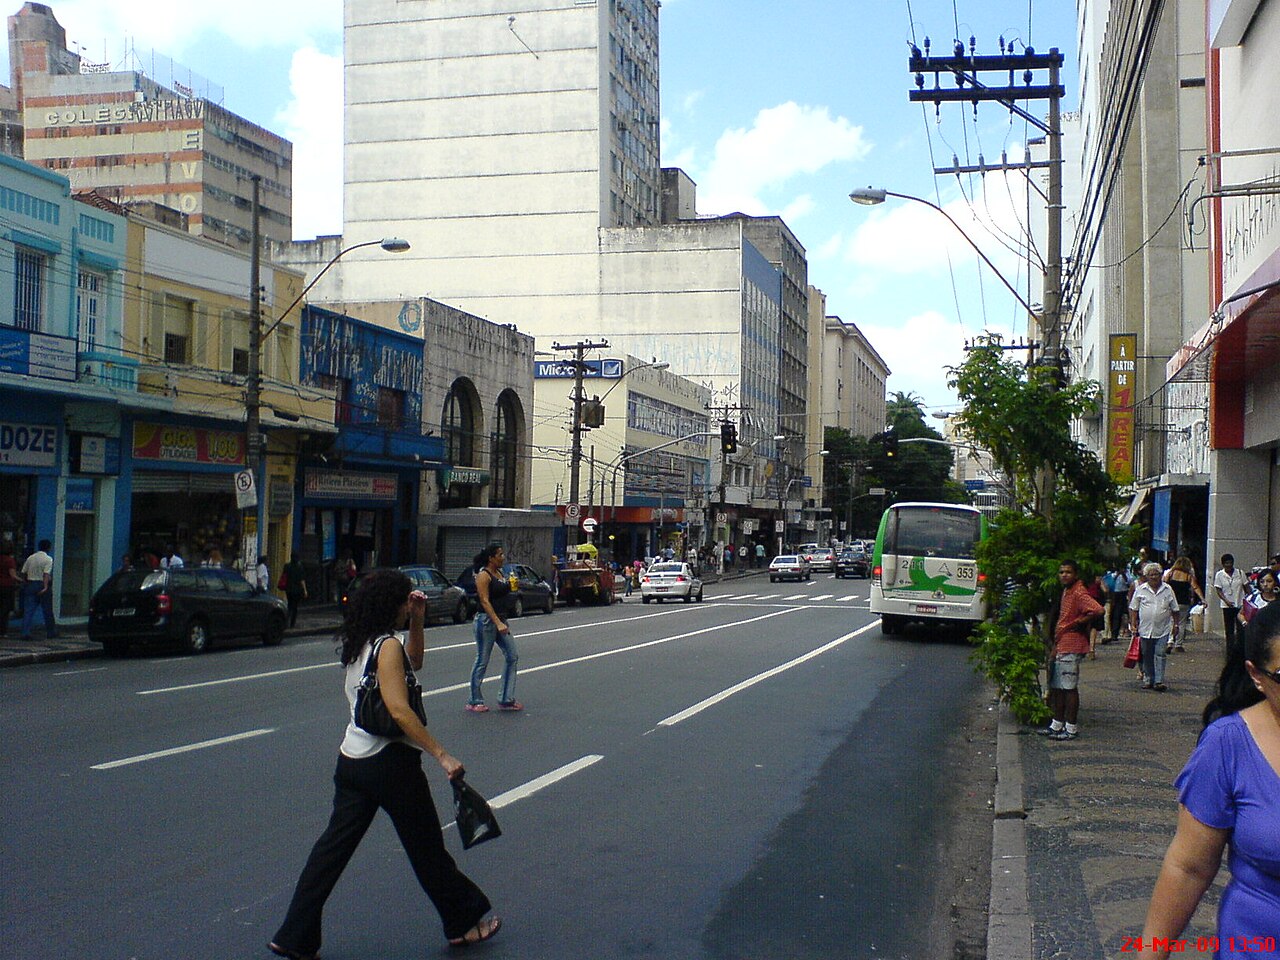 File:Av Campos Sales e Cruzamento da Rua Jose Paulino - Campinas SP -  panoramio.jpg - Wikimedia Commons